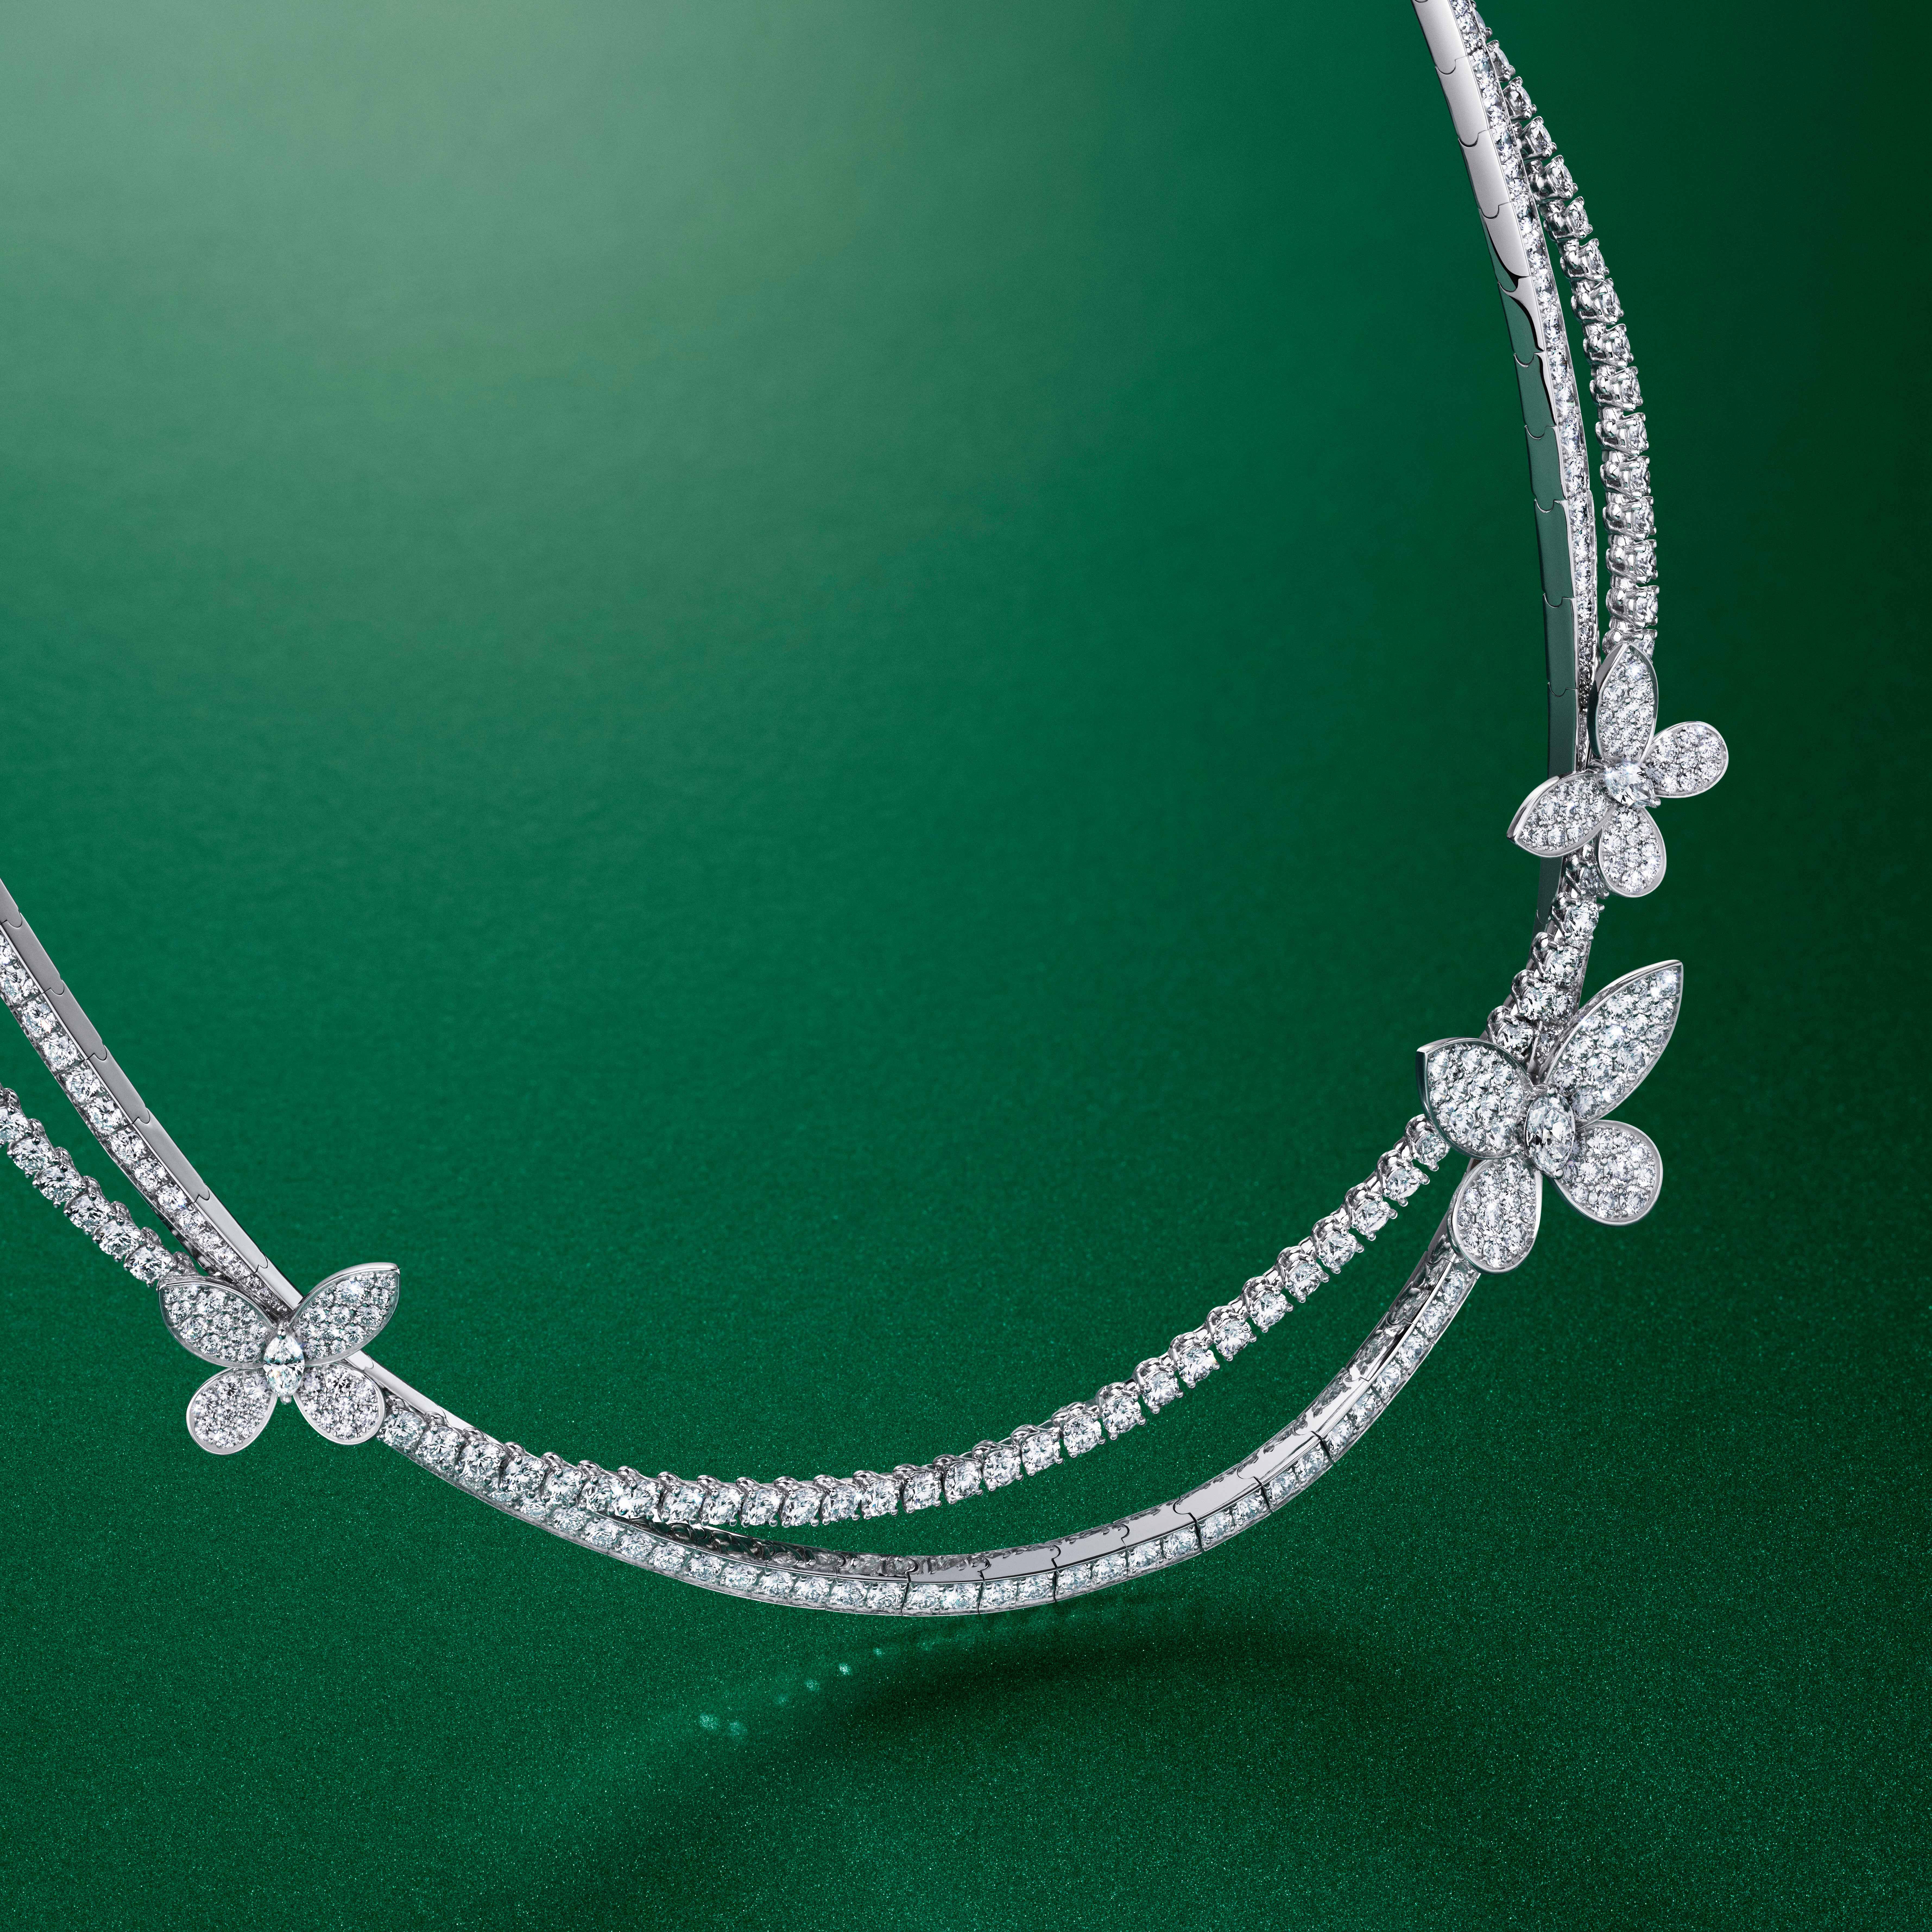 Video of Graff High Jewellery Diamond Necklace